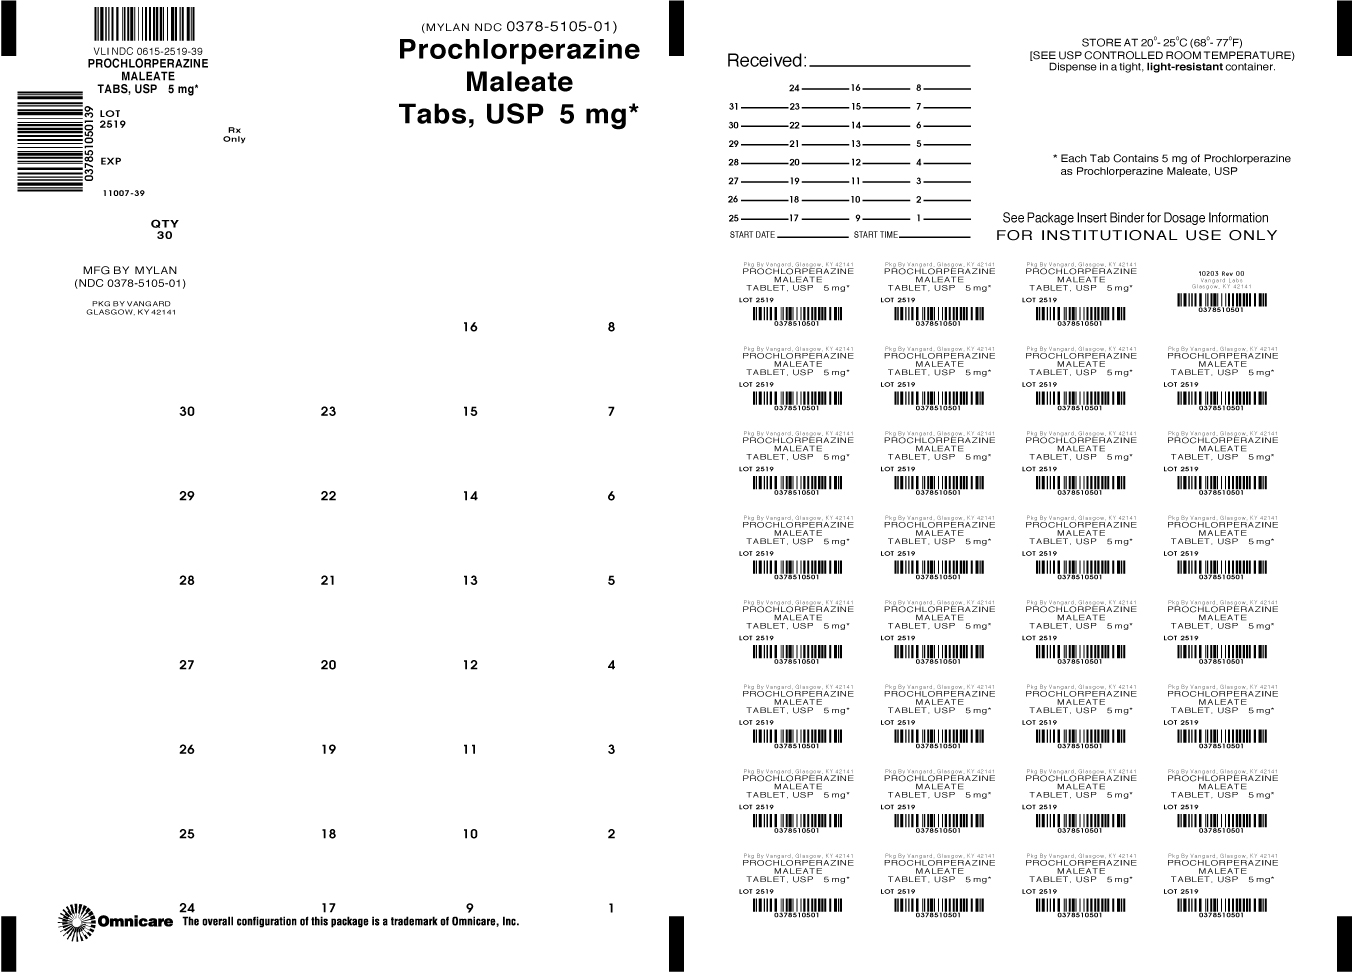 Principal Display Panel-Prochlorperazine Maleate Tabs, USP 5mg